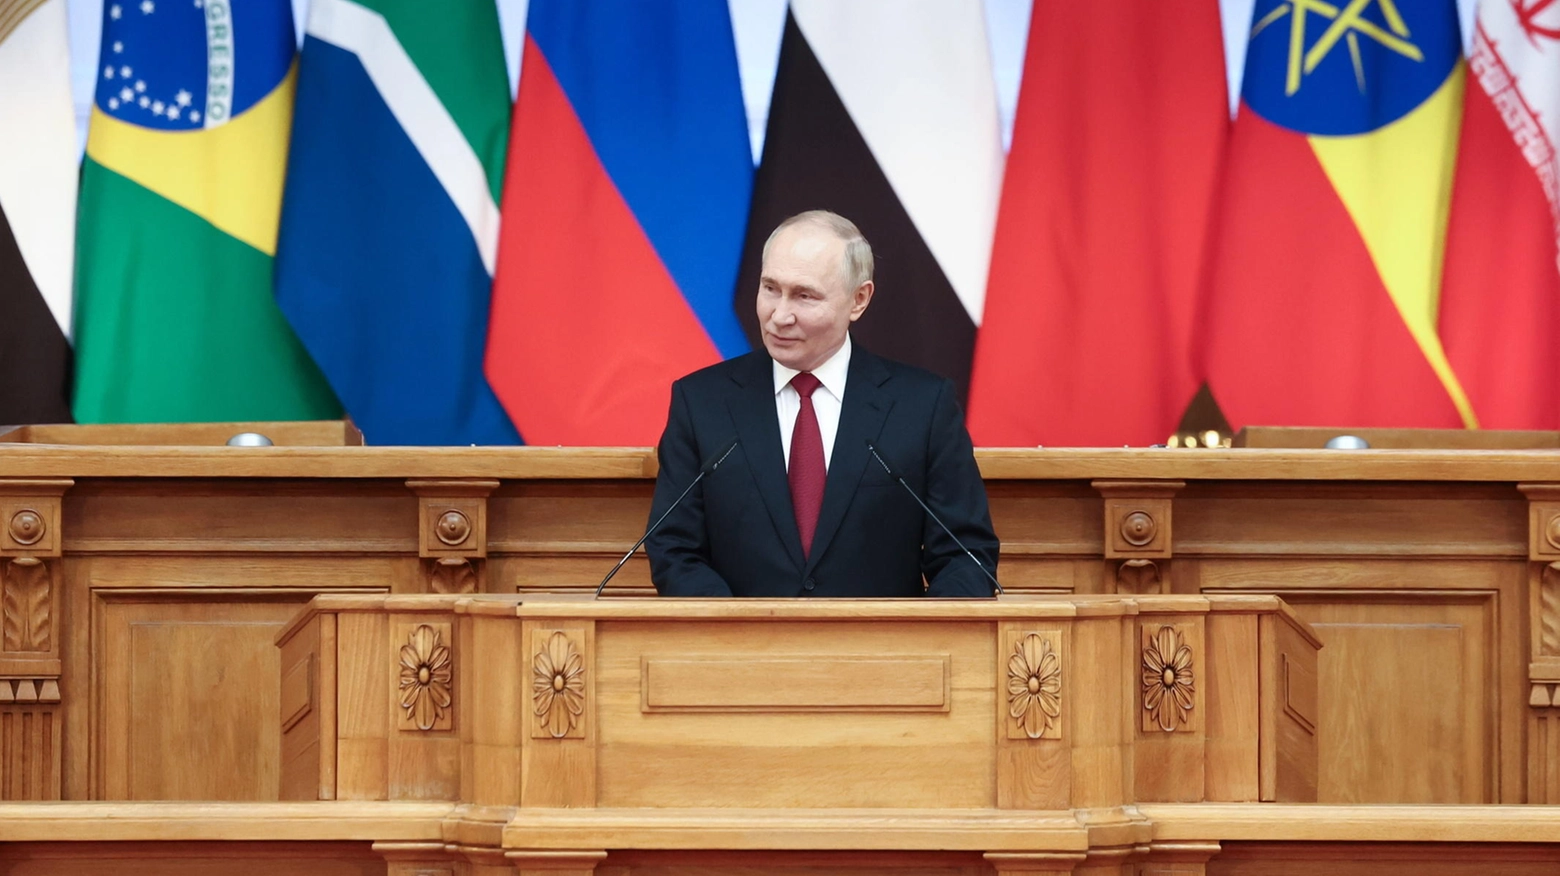 Il presidente russo Vladimir Putin al vertice dei Brics (foto Ansa)